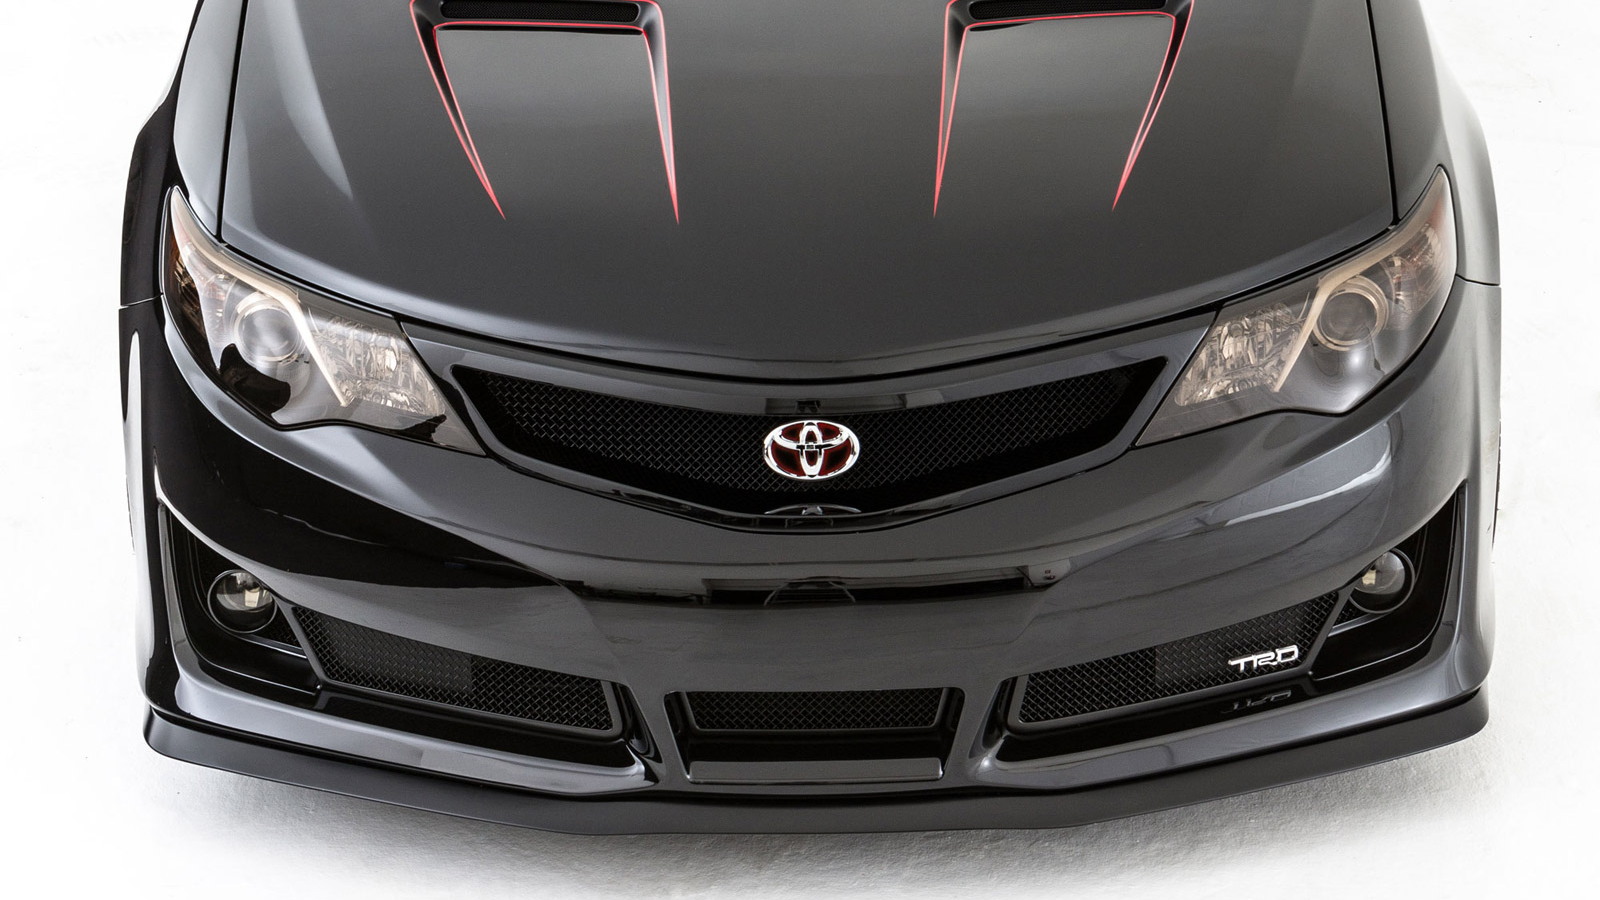 Kyle Busch’s ‘Rowdy Edition’ Toyota Camry